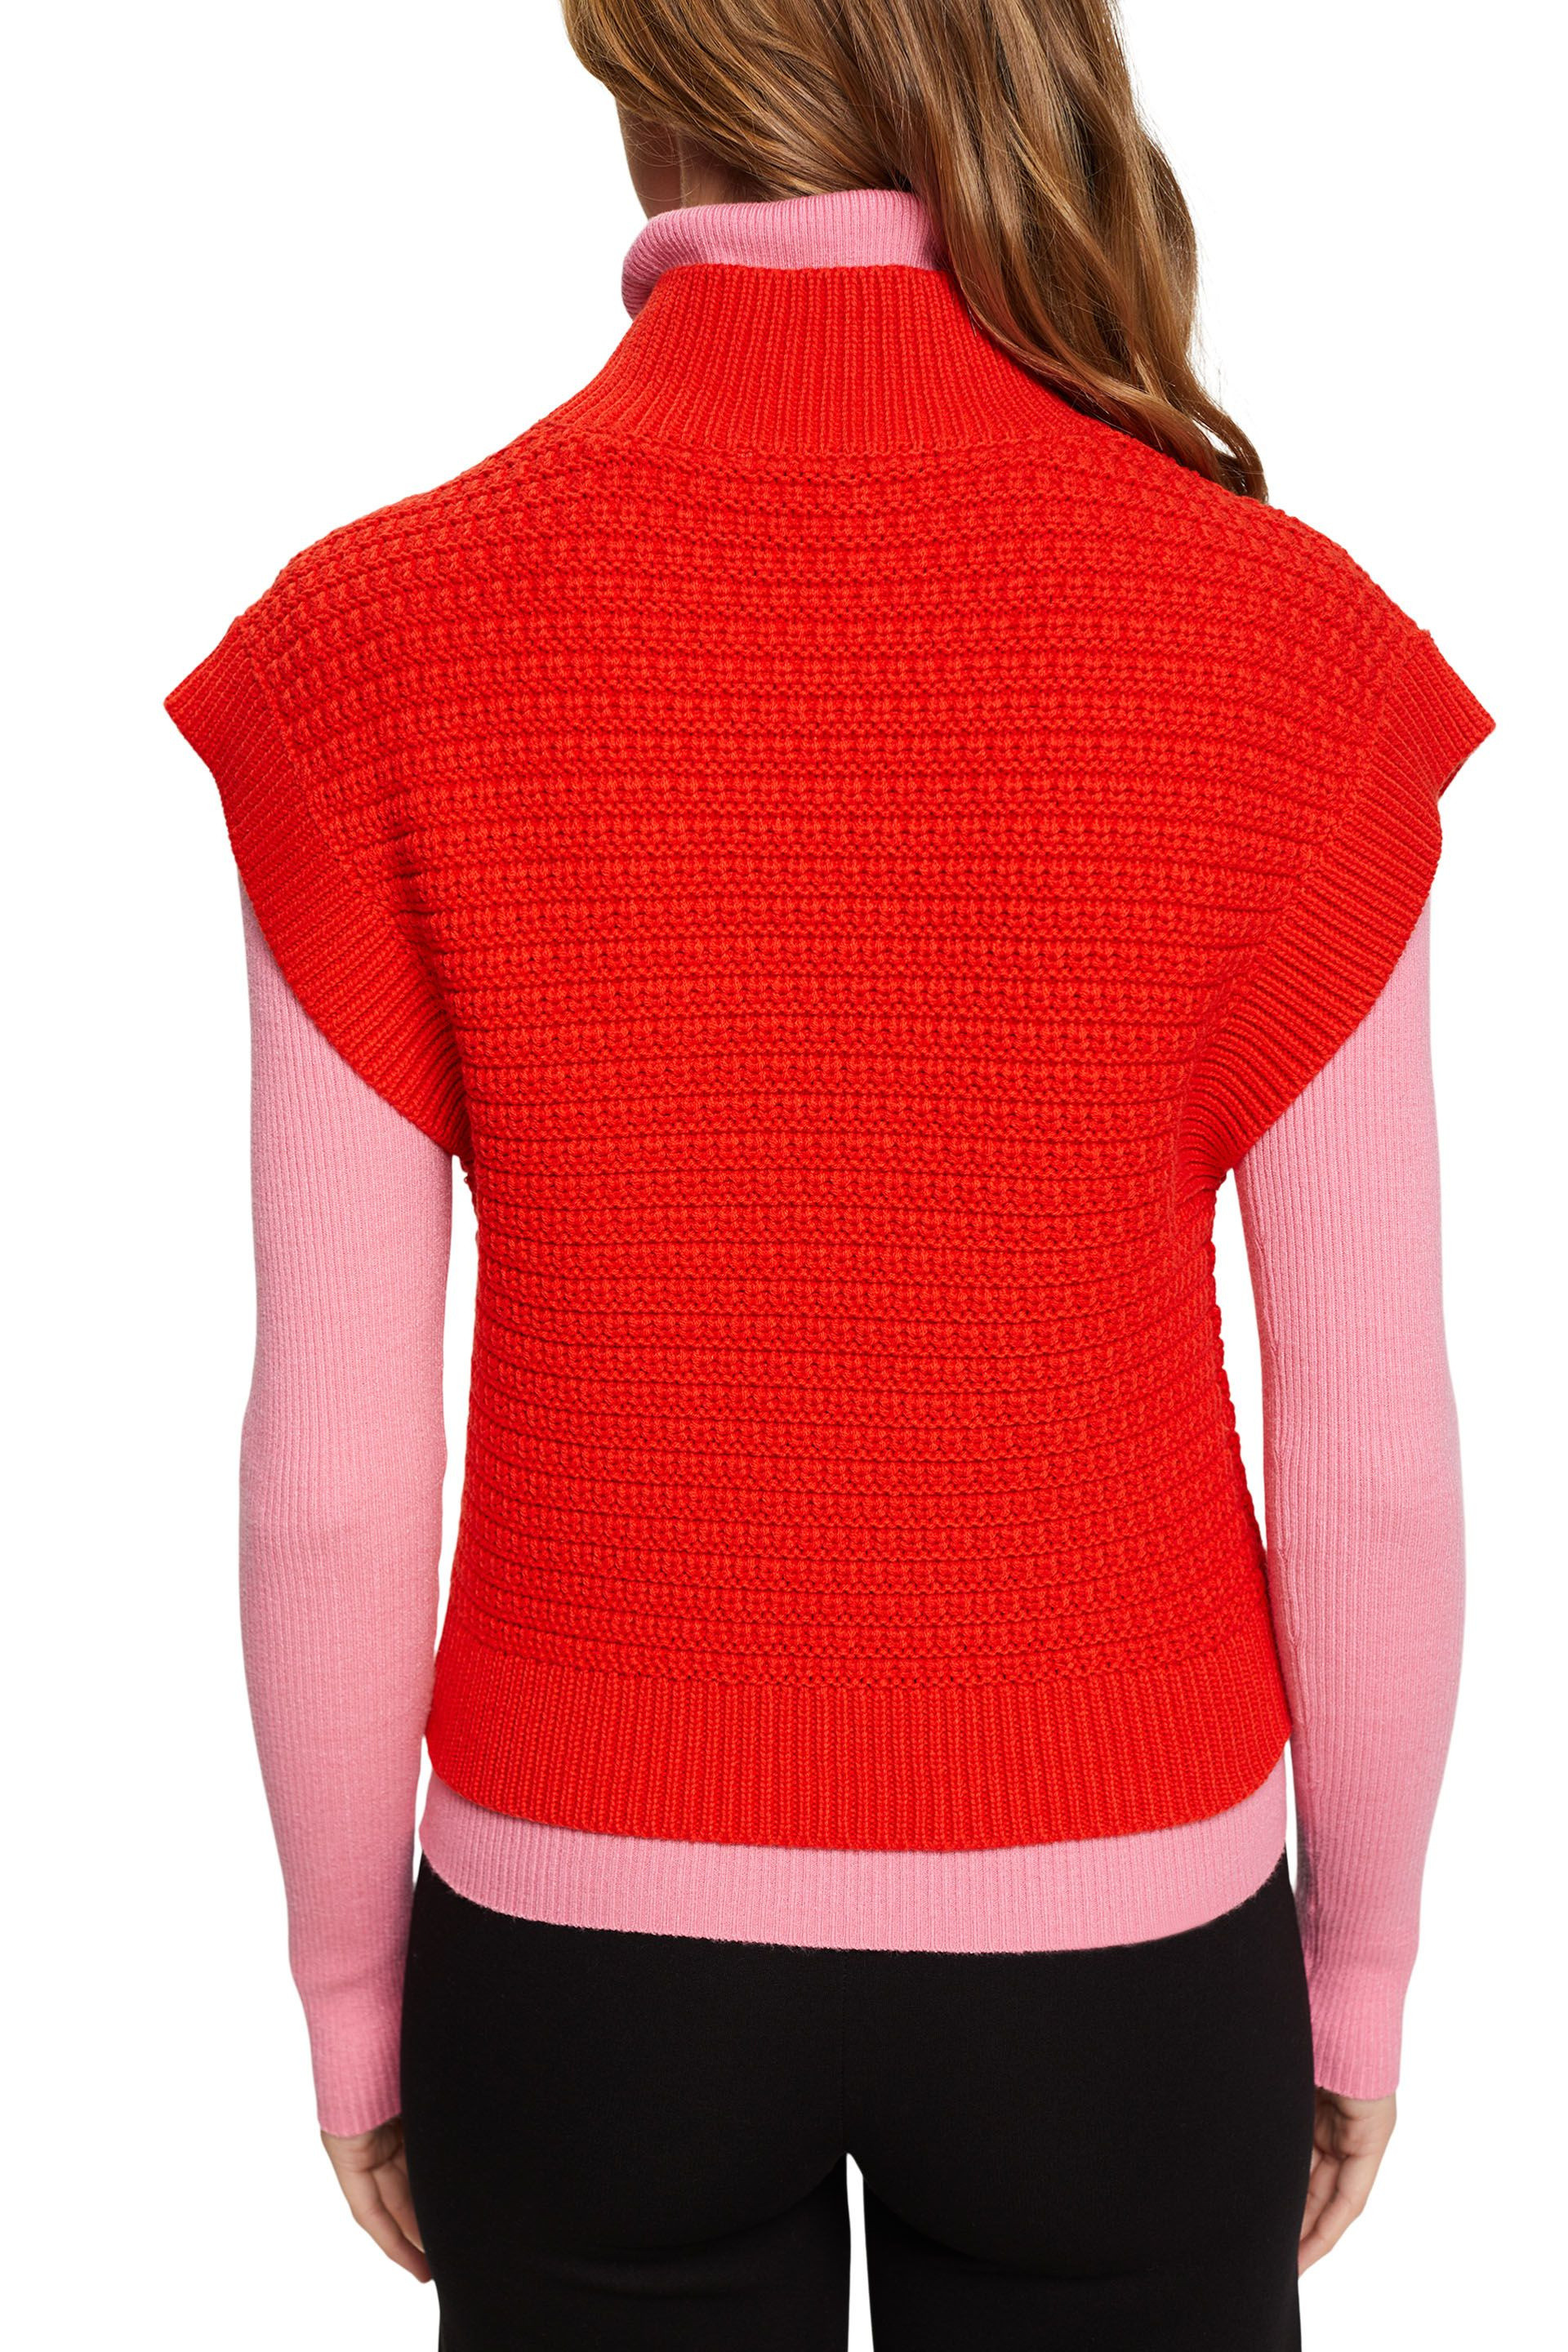 Esprit - Knitted vest in cotton blend, Red, large image number 2